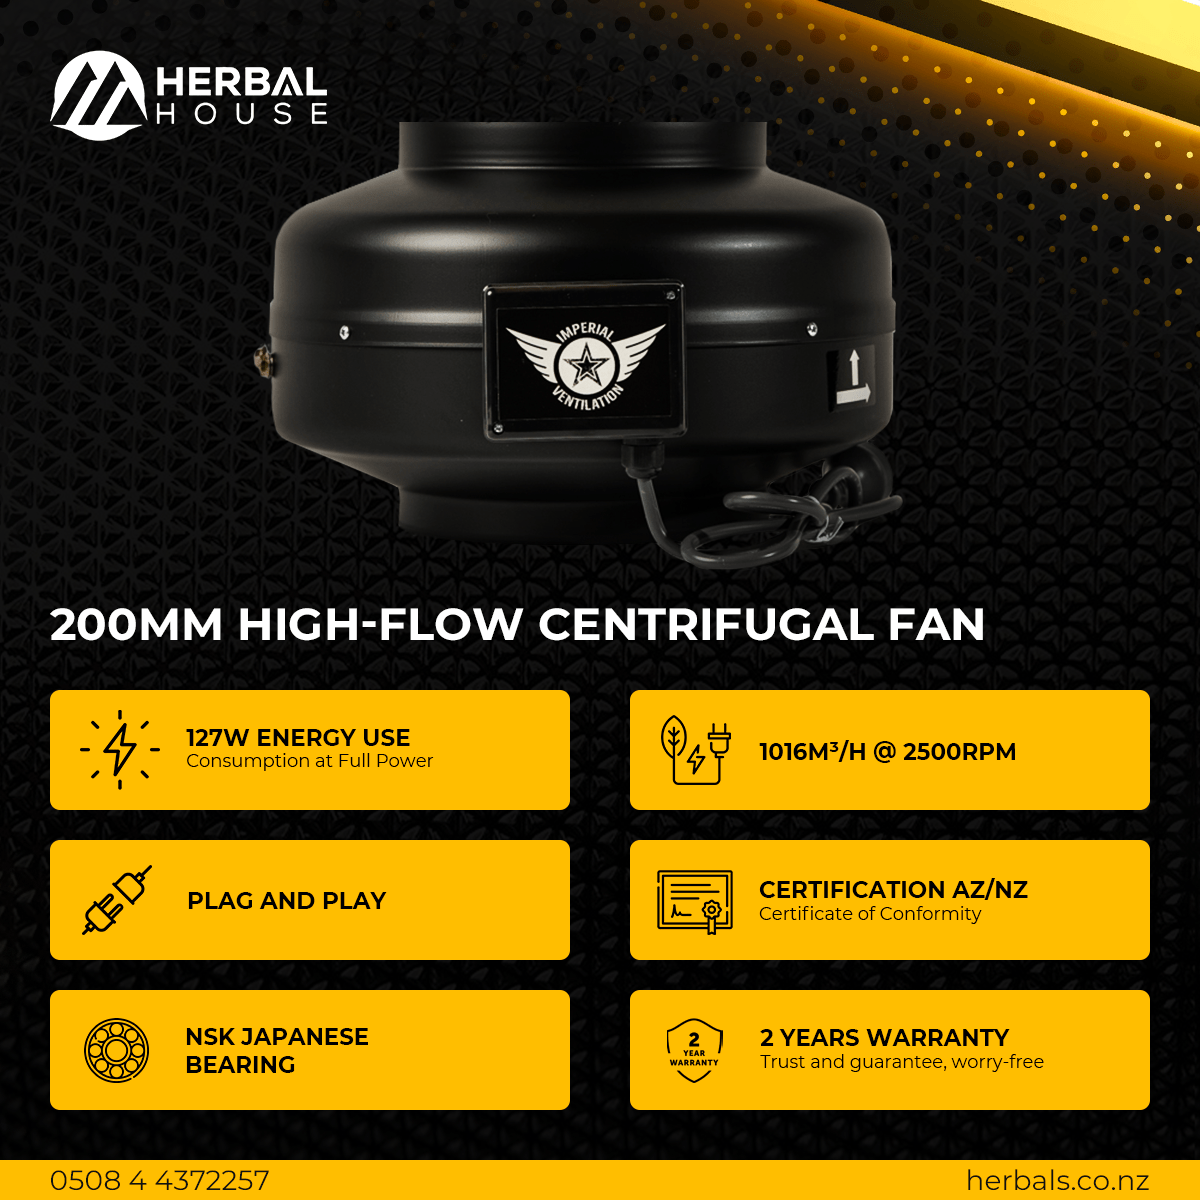 200mm High-Flow Centrifugal Fan specs